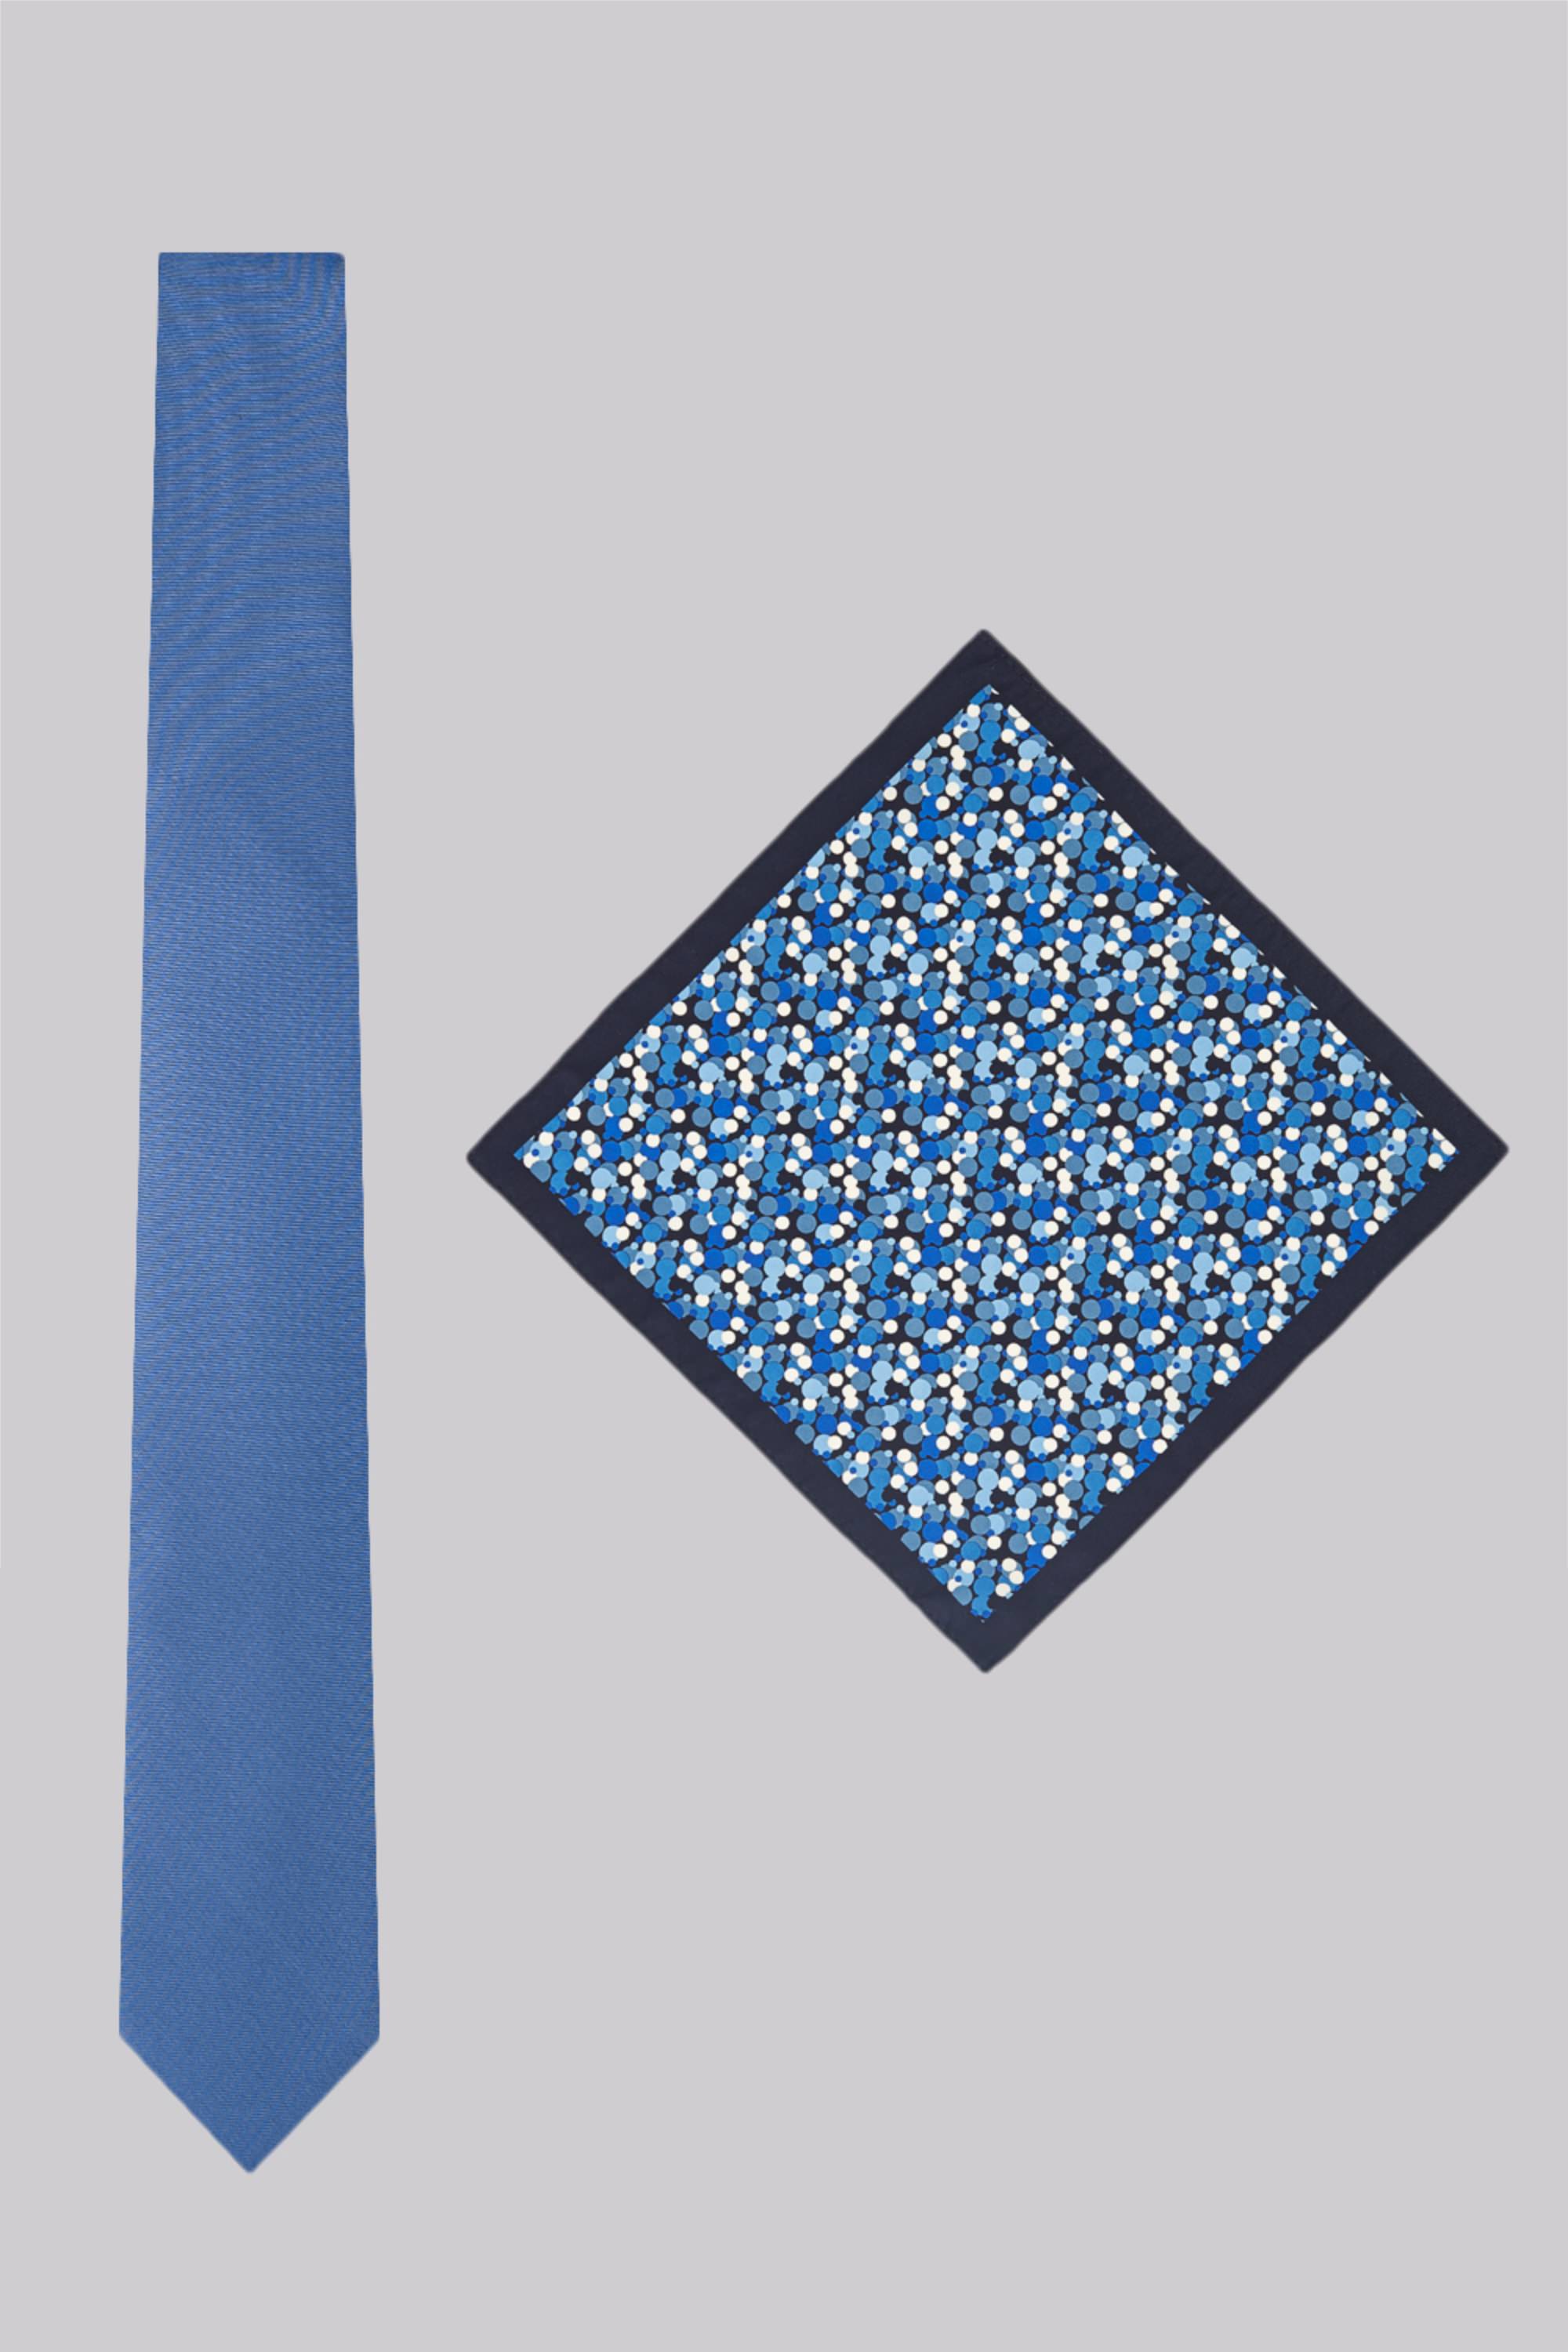 Lon with Blue Square Logo - Moss London Blue Bubble Print Skinny Tie and Pocket Square Set